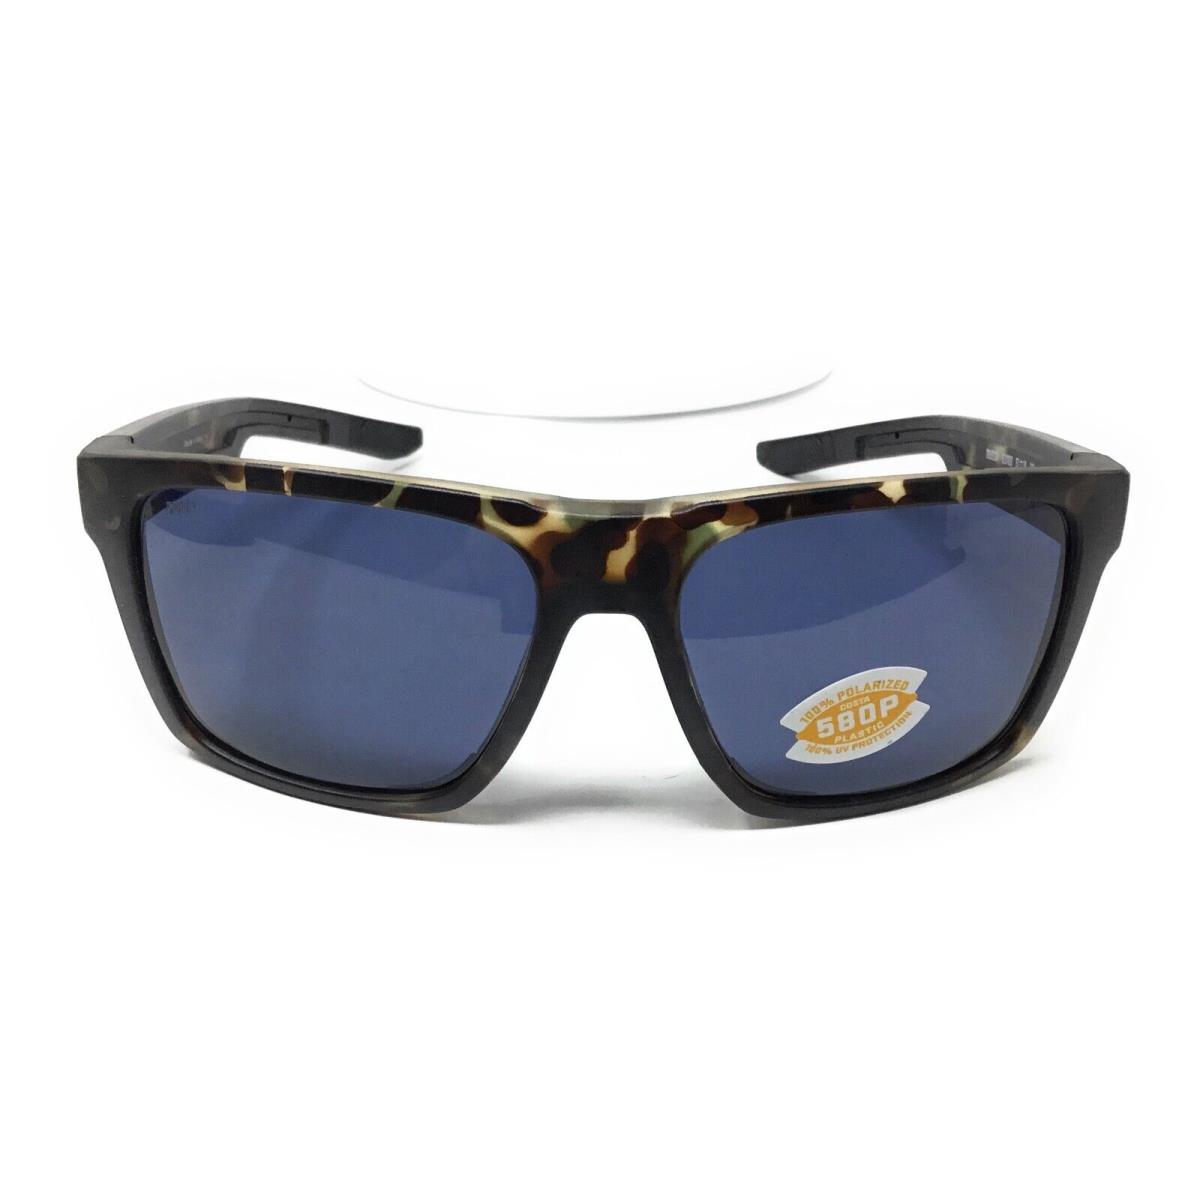 Costa Del Mar Lido Mens Gray Polarized Lens Sunglasses 6S9104 910408 57-16 - Wetlands Frame, Gray Lens